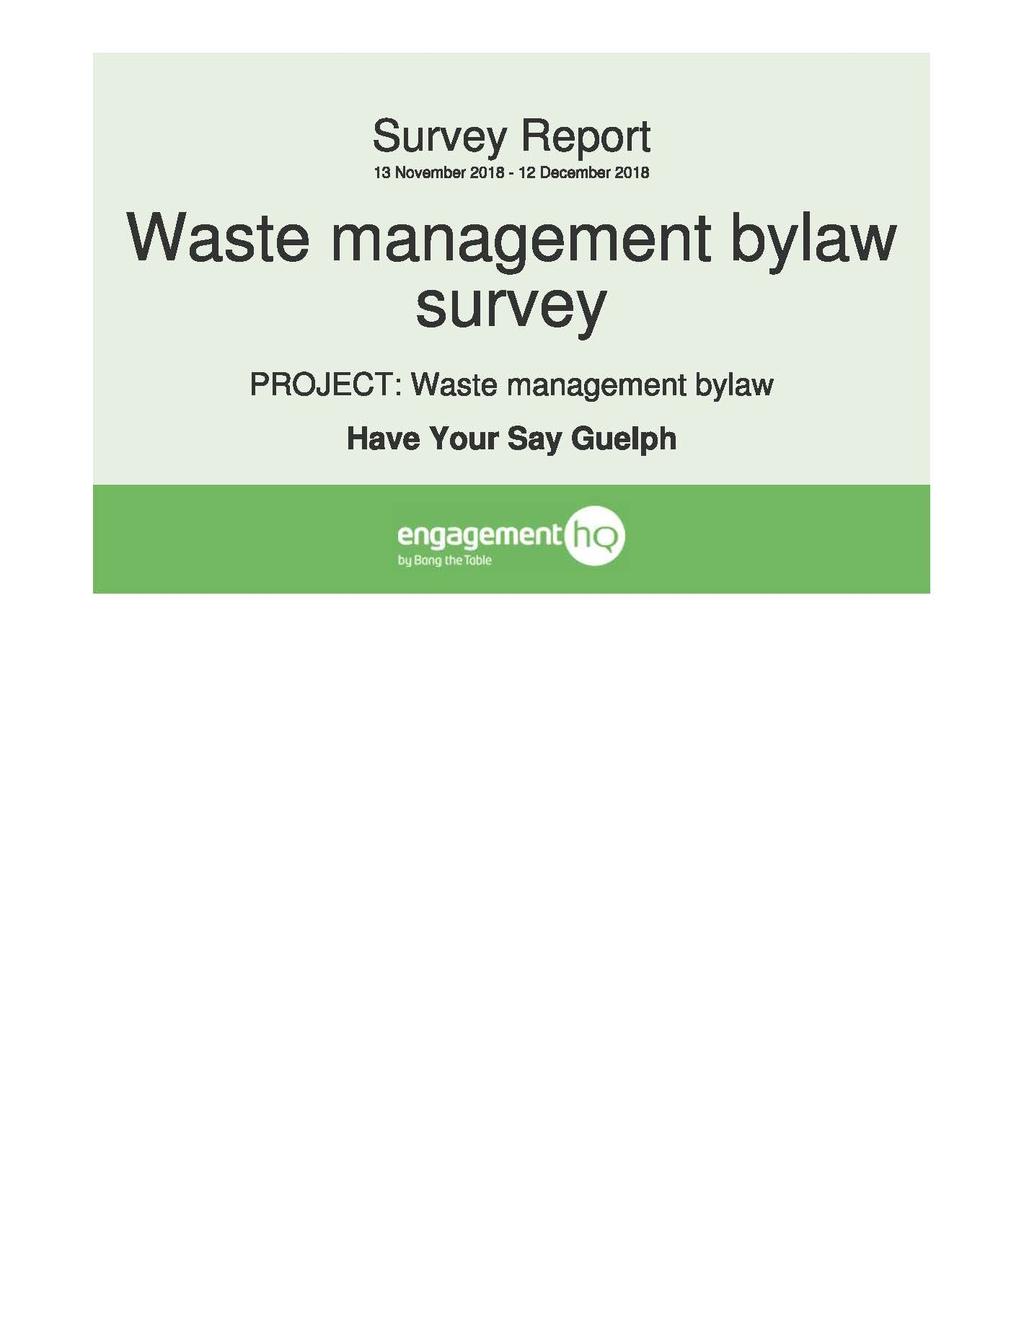 Attachment 1 Survey Report 13 November 2018-12 December 2018 Waste